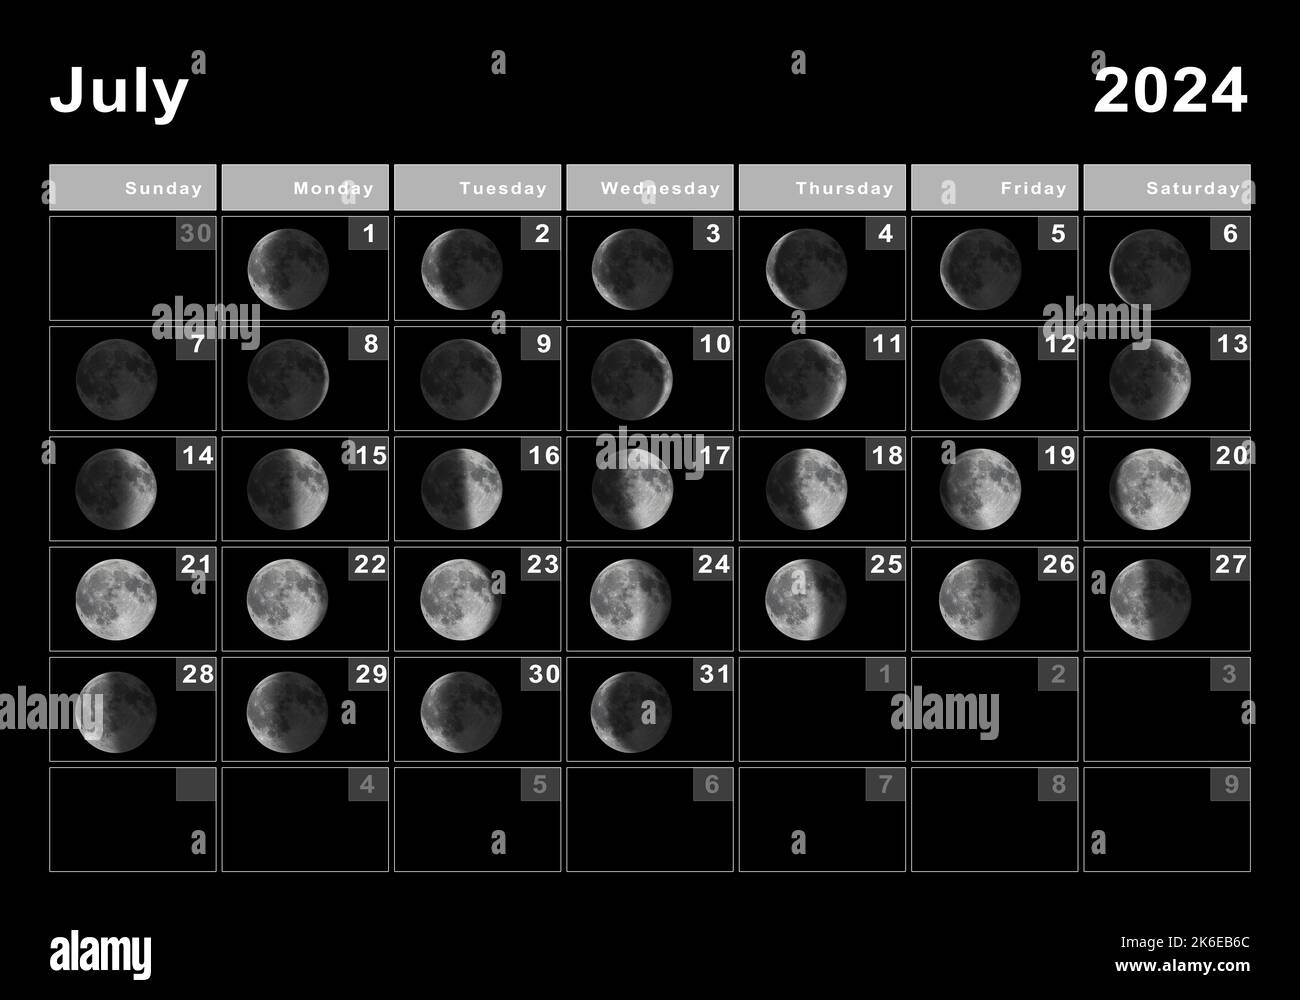 July 2024 Lunar Calendar, Moon Cycles, Moon Phases Stock Photo - Alamy in July 16 Lunar Calendar 2024